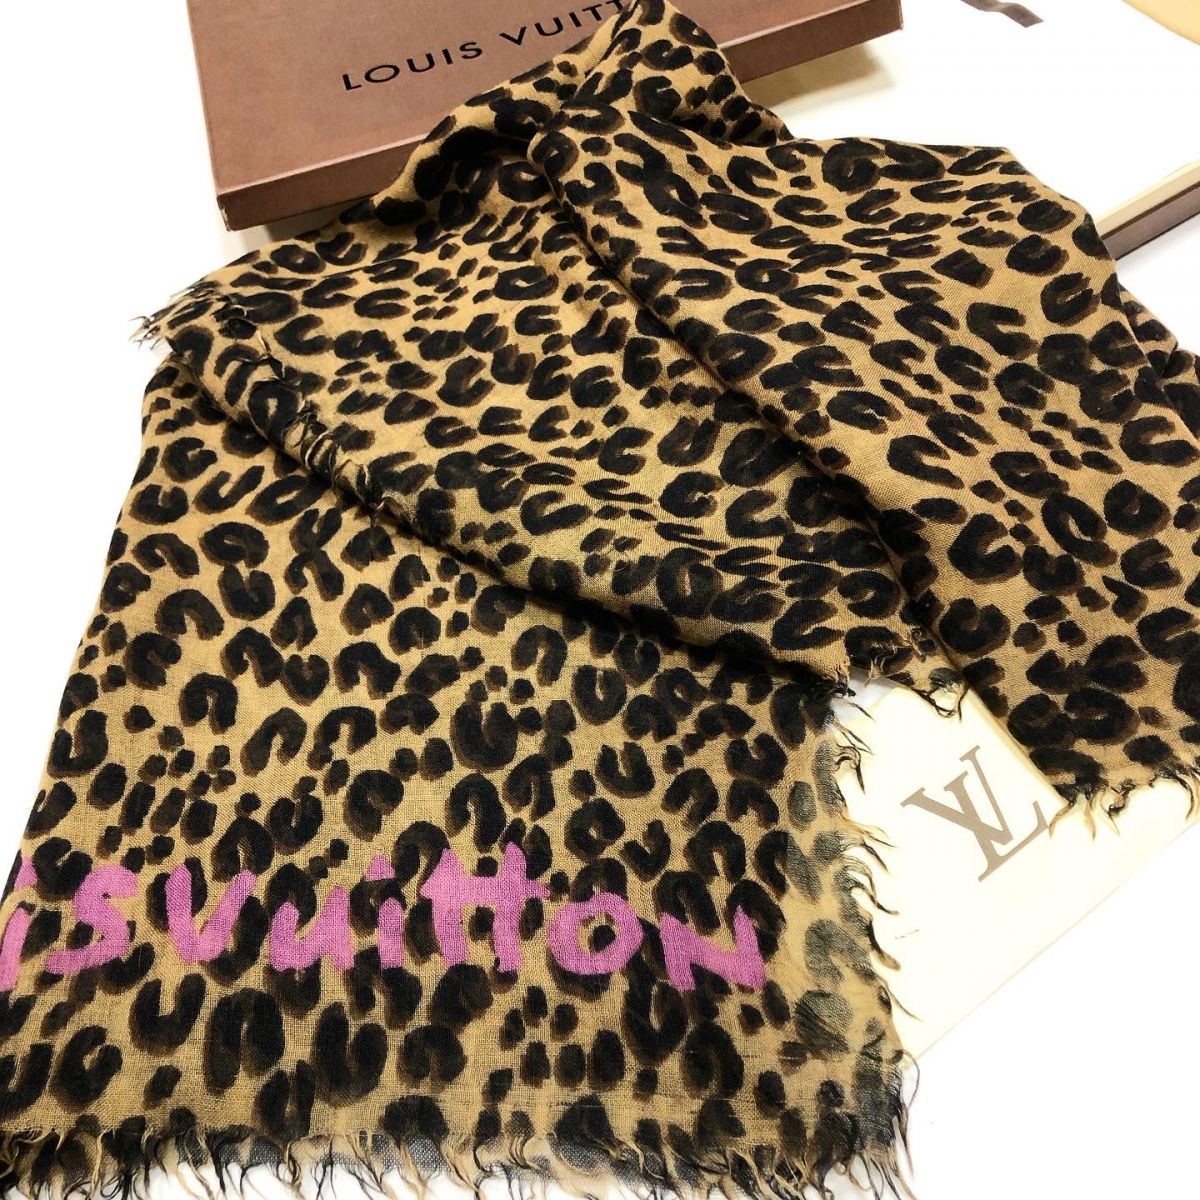 Палантин Louis Vuitton размер 140/140 цена 10 770 руб 